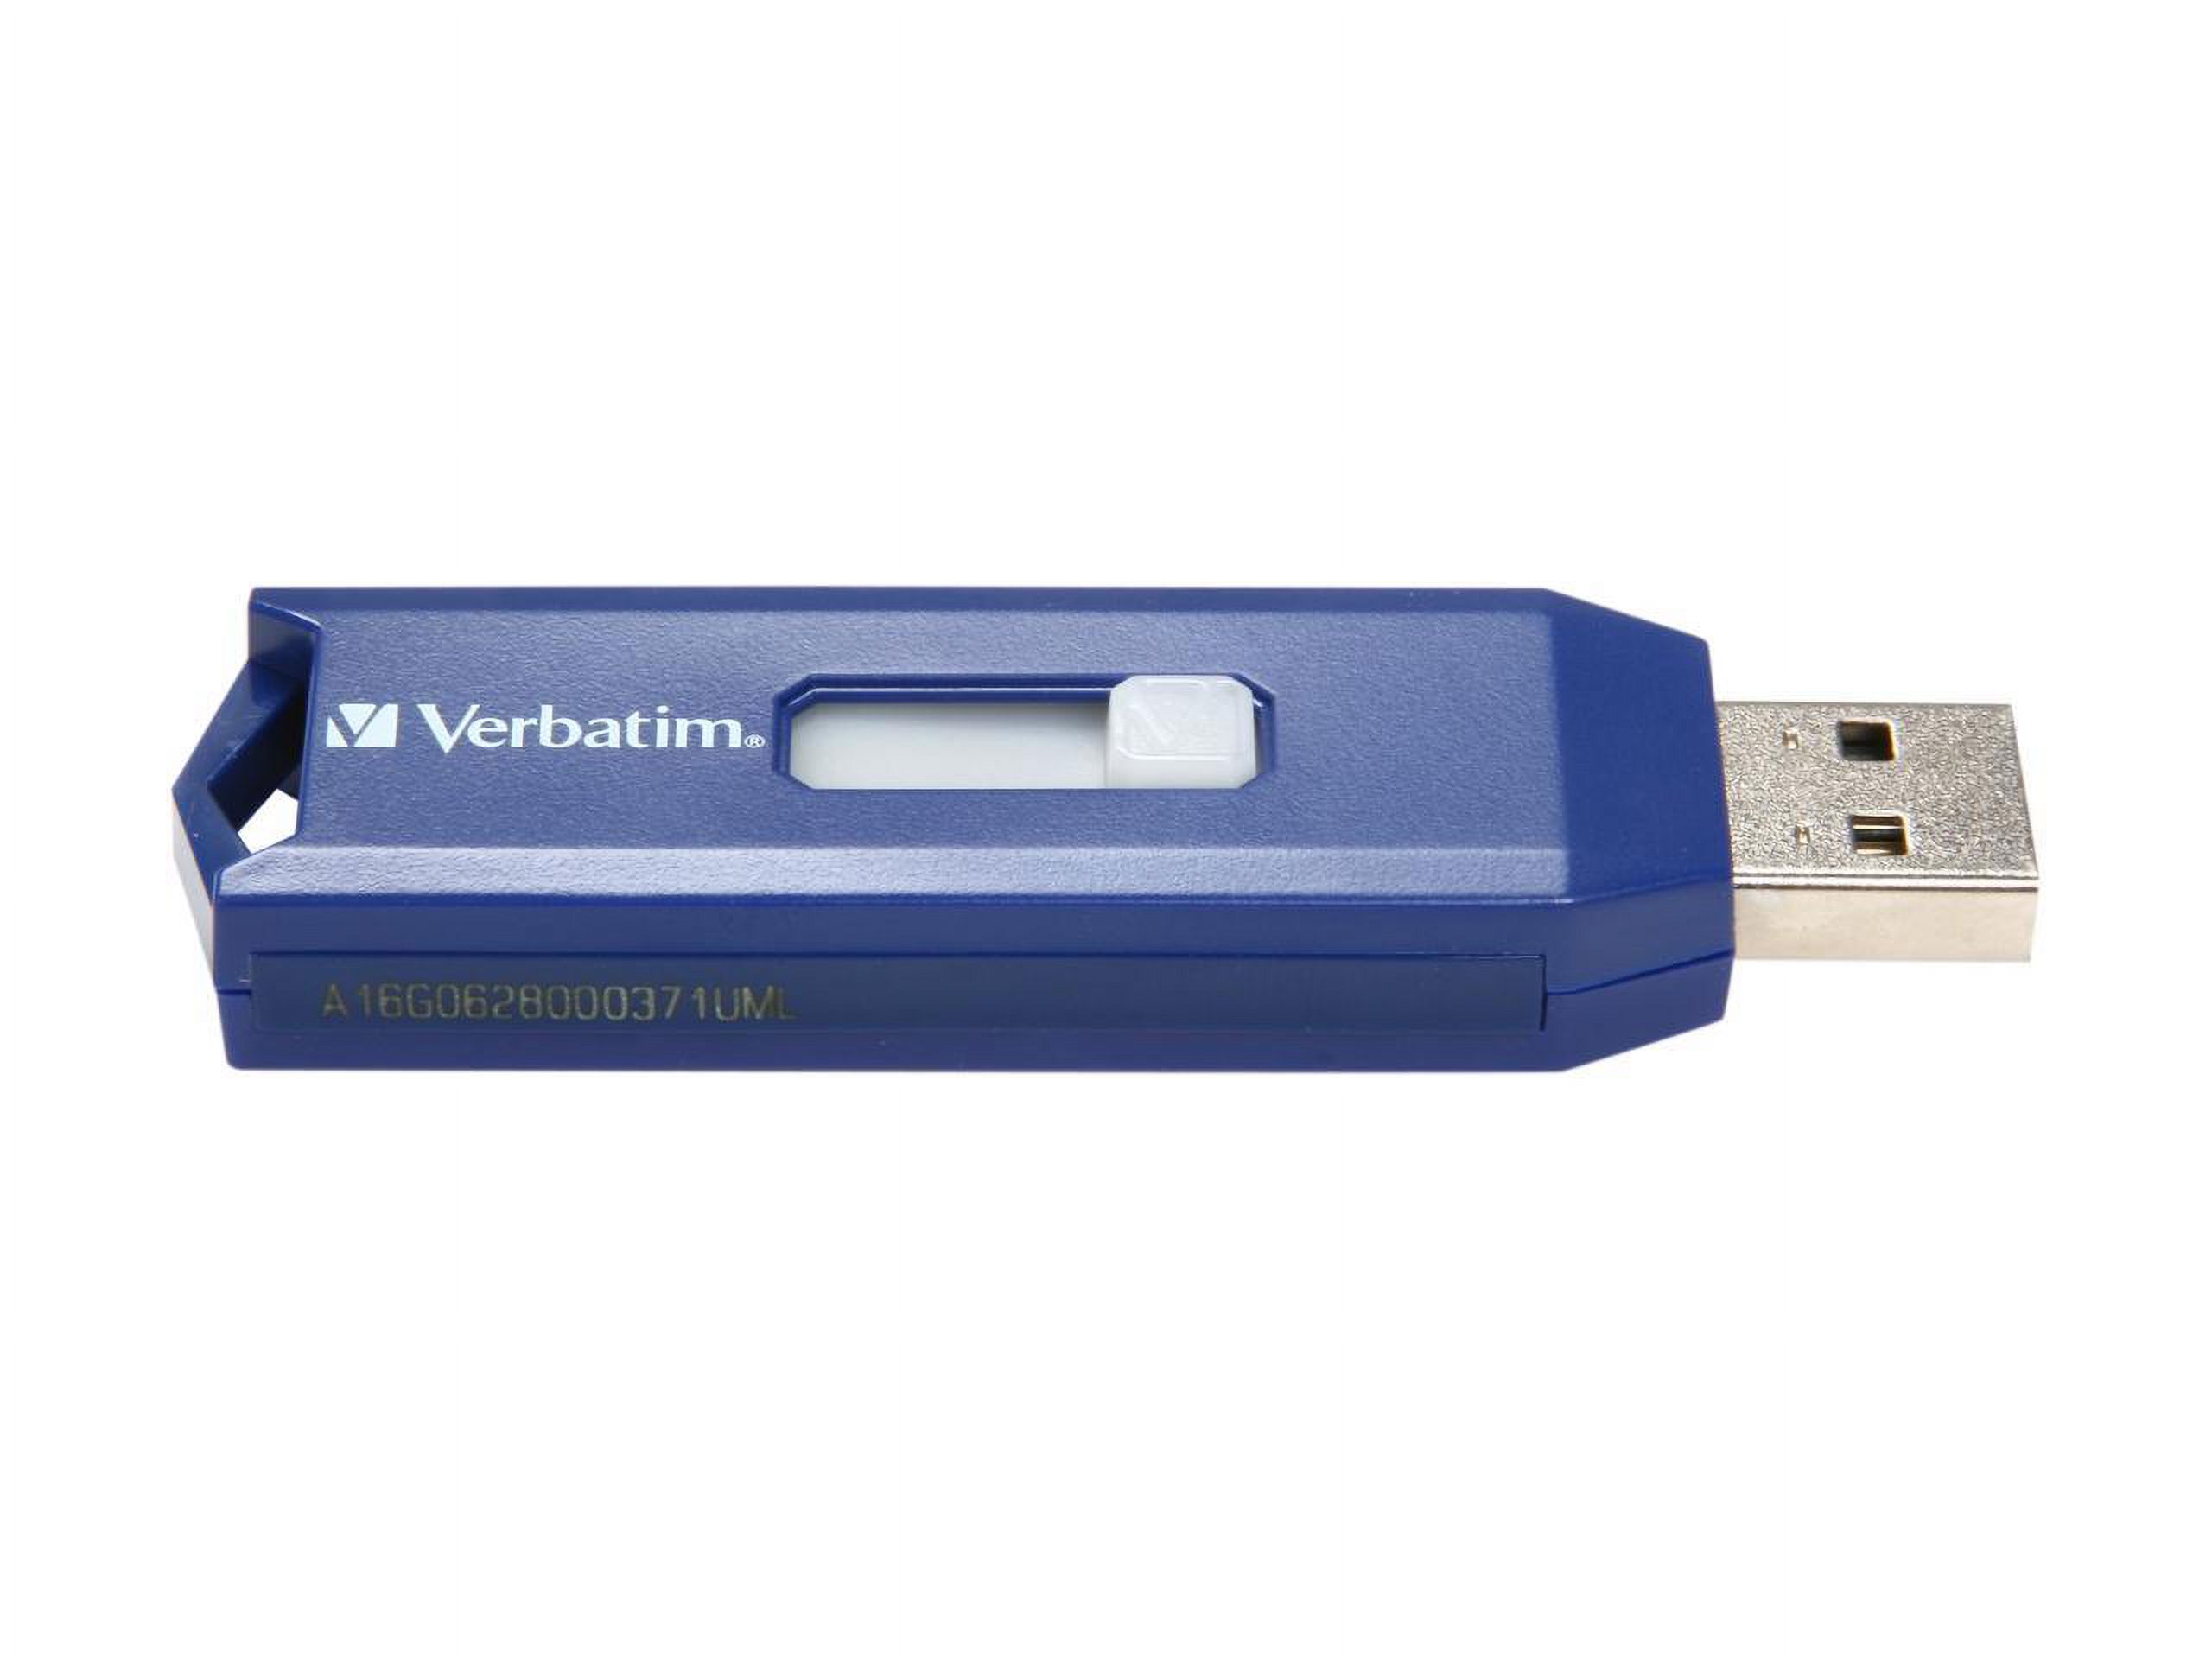 Verbatim Smart 16GB USB 2.0 Flash Drive Model 97275 - image 5 of 6